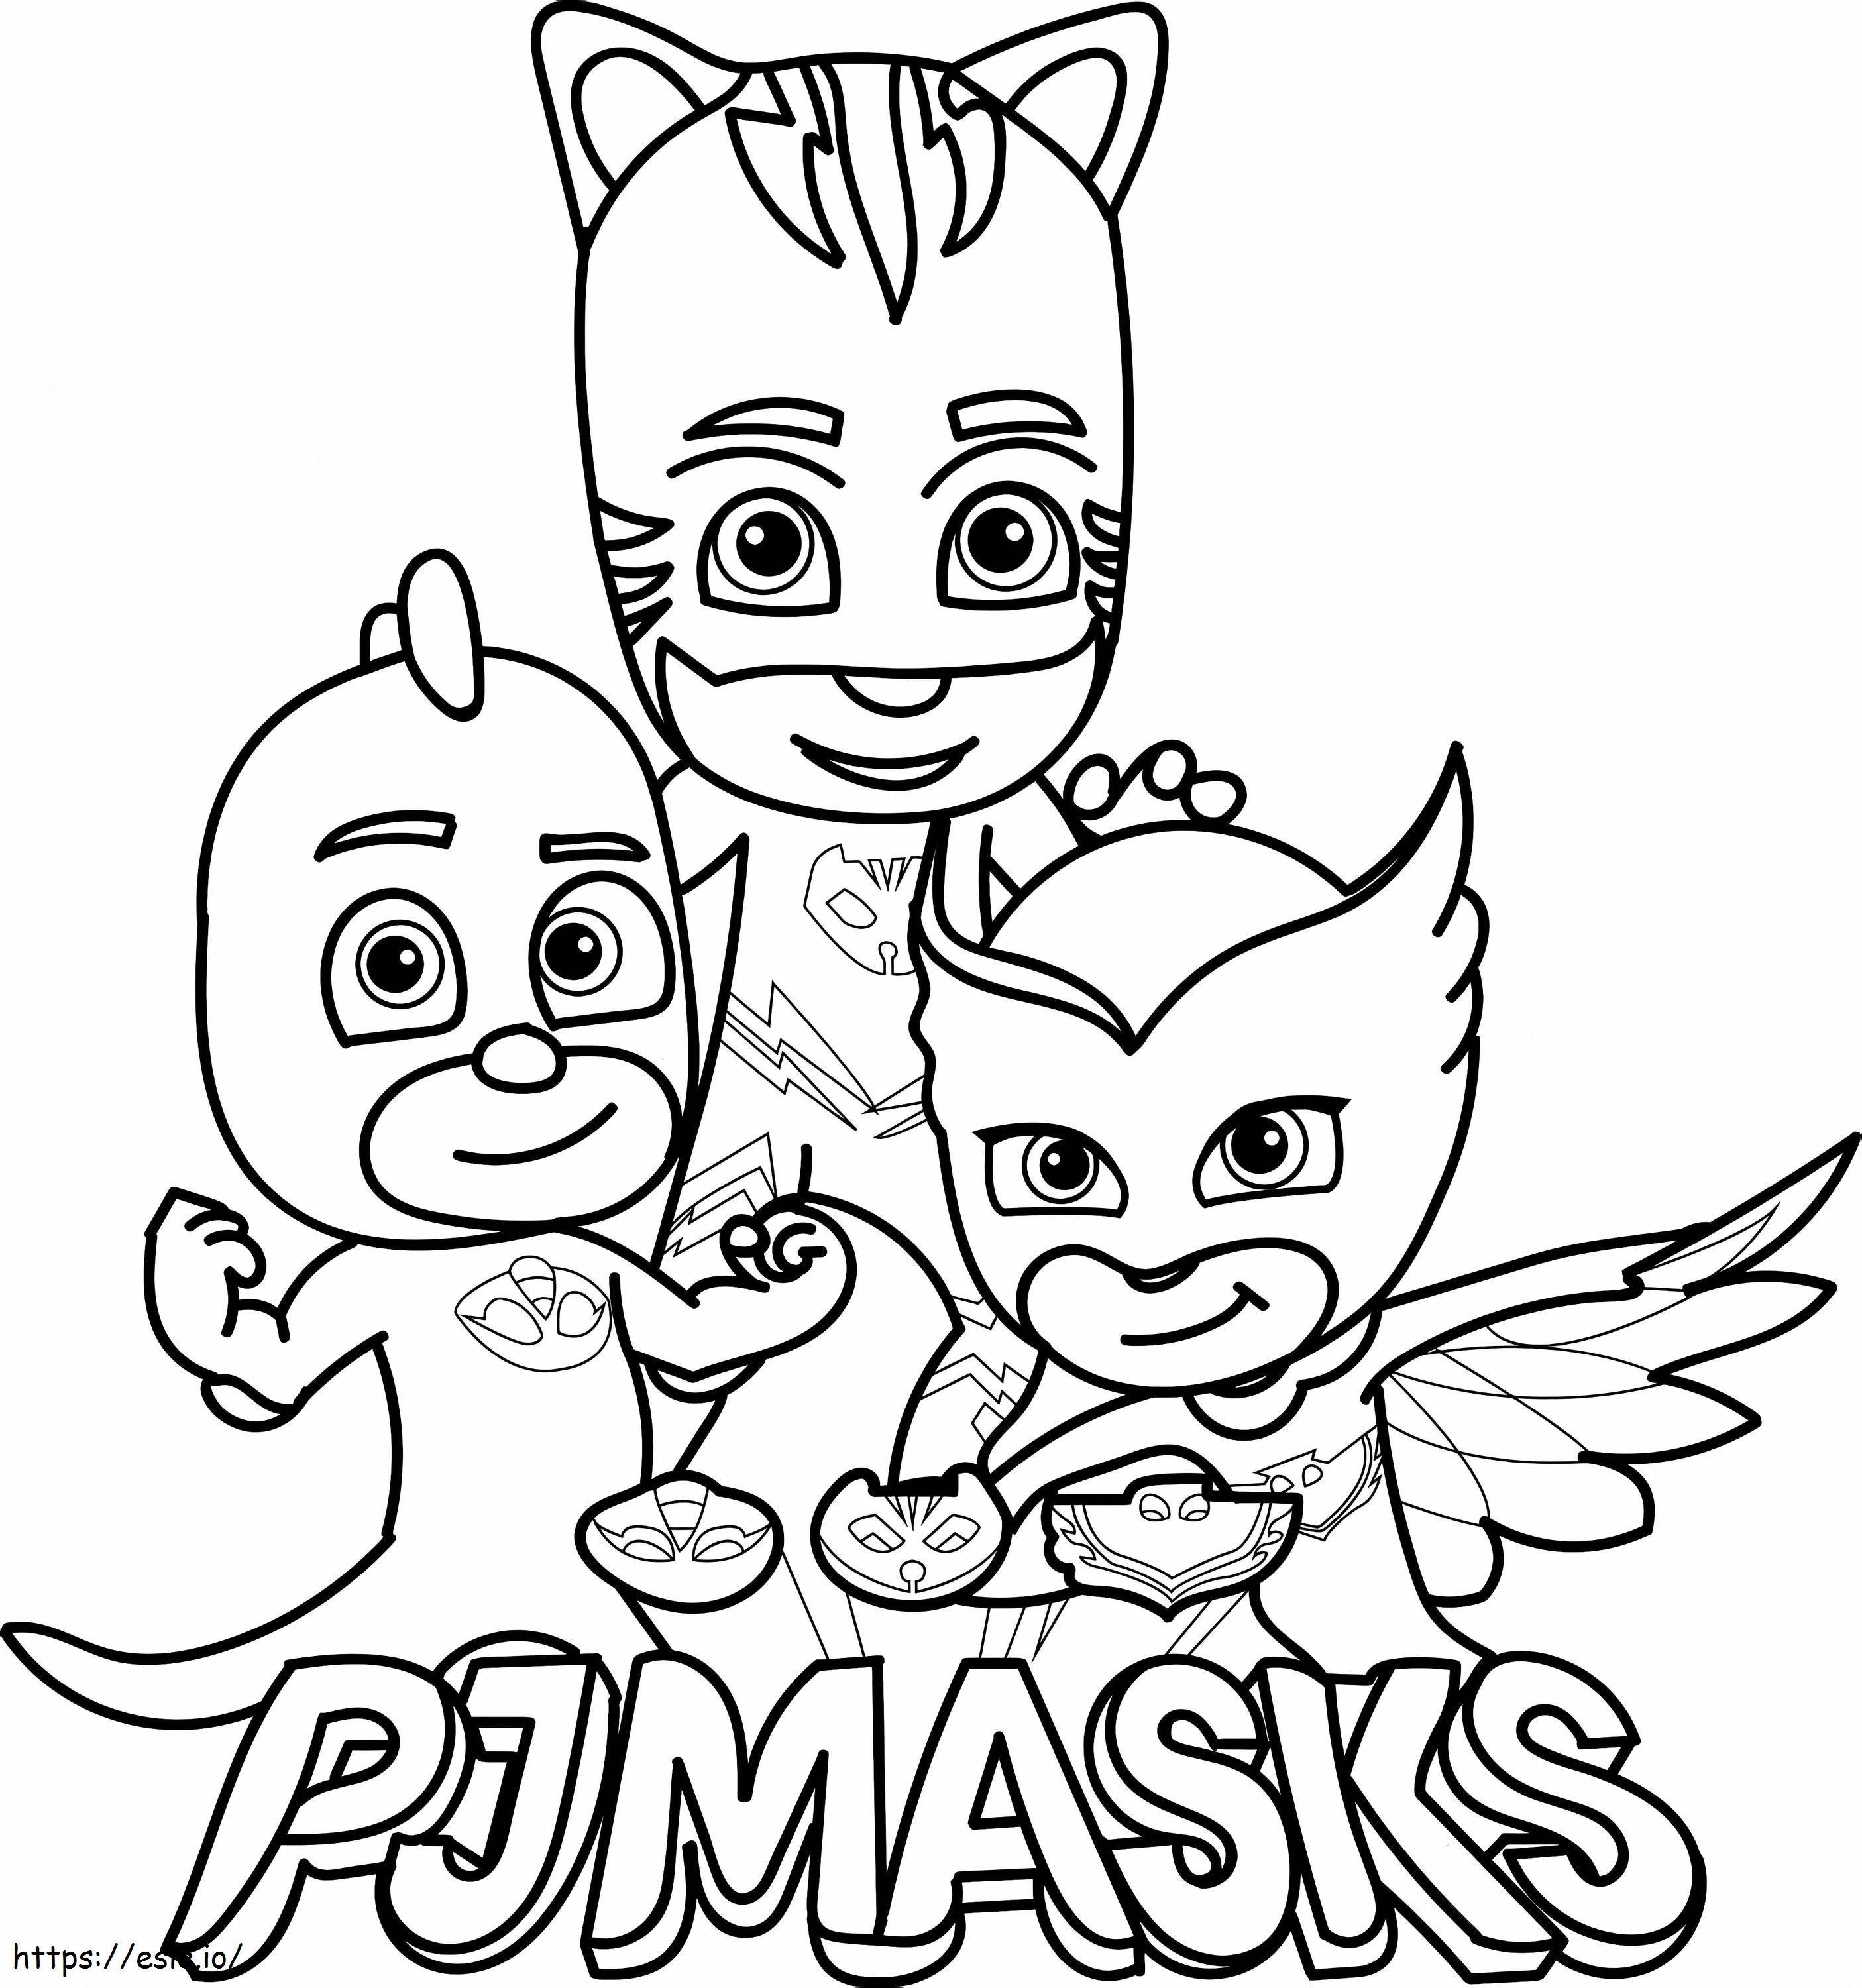 Equipe PJMASKS para colorir